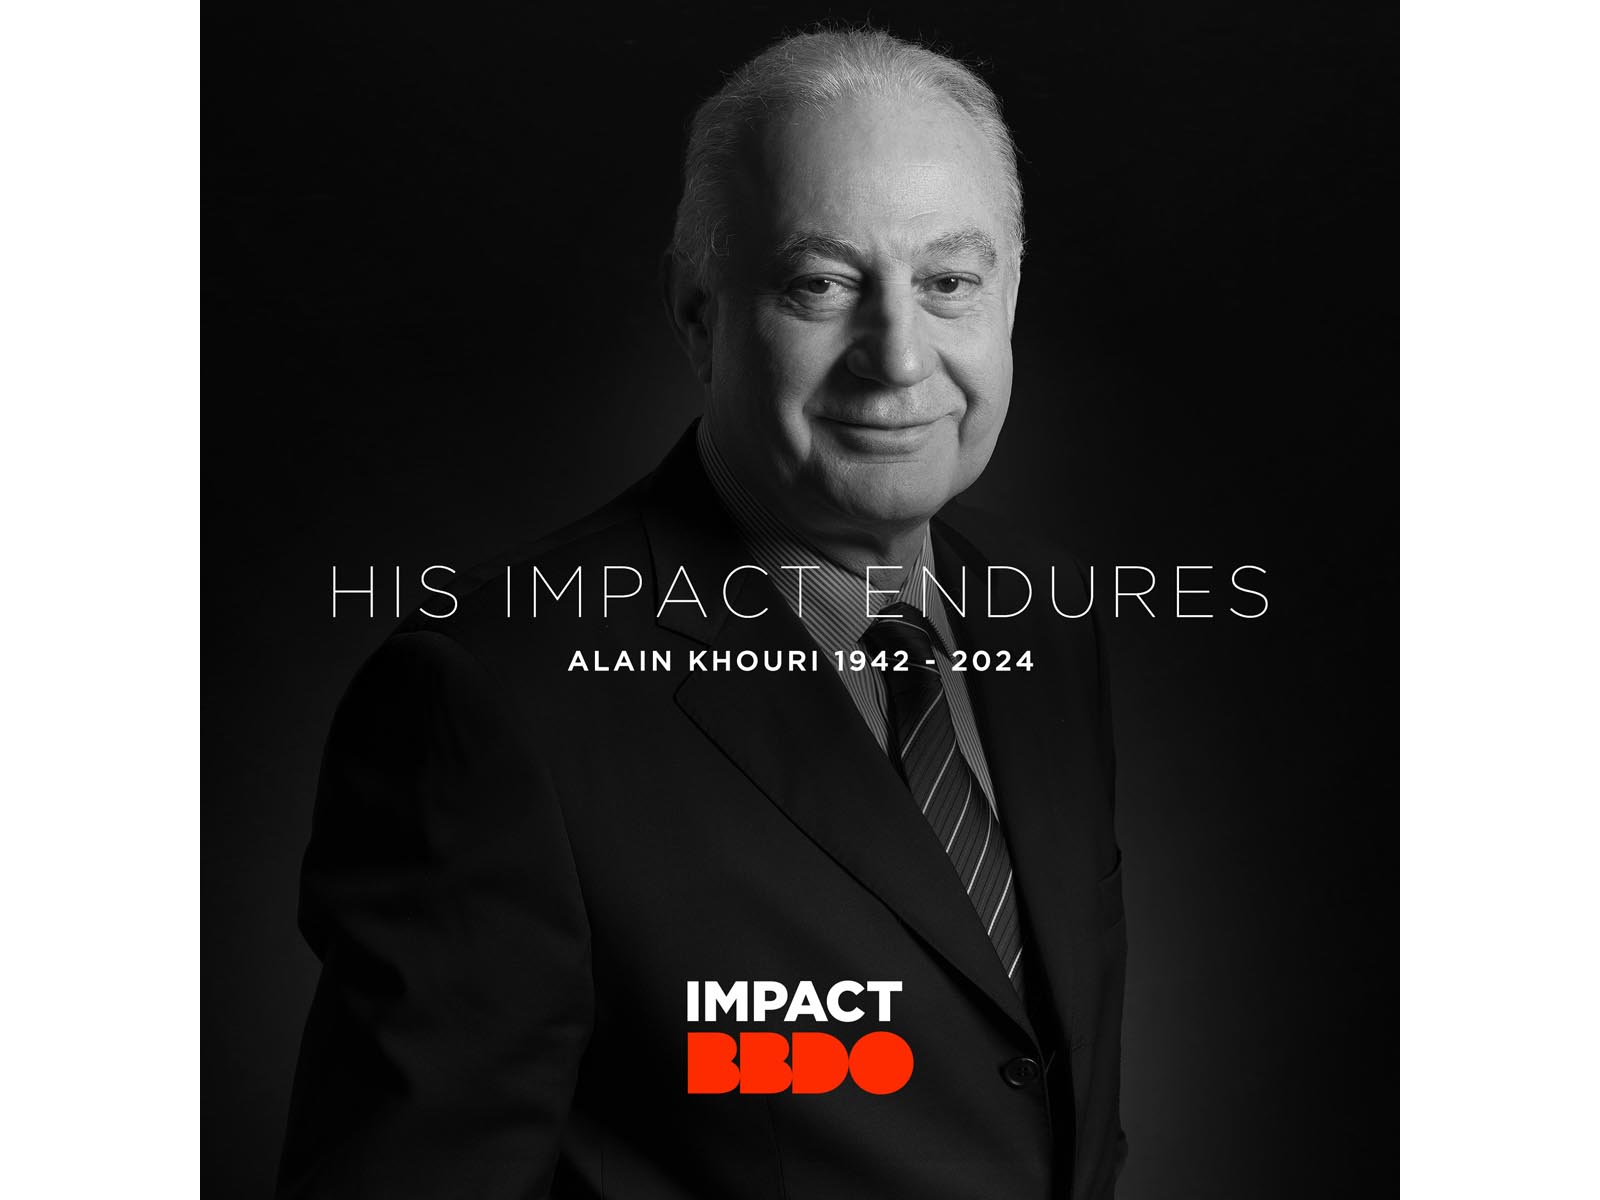 Alain Khouri, Impact BBDO’s visionary founder, passes away